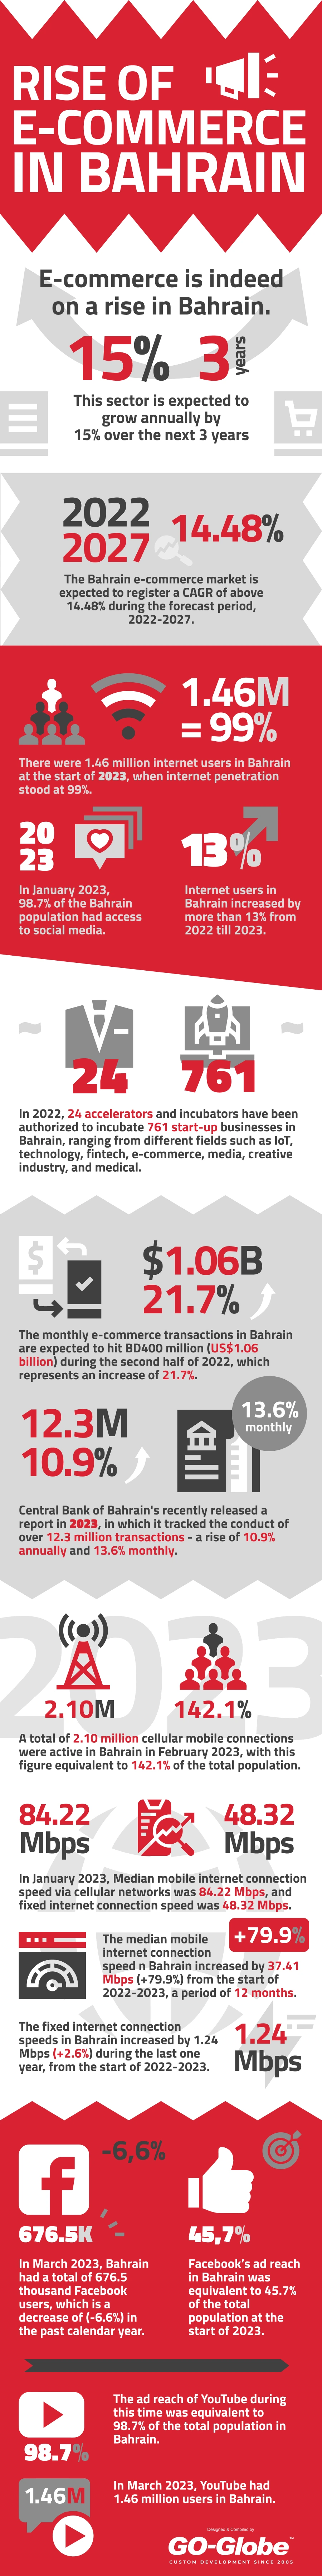 rise_of_ecommerce_bahrain